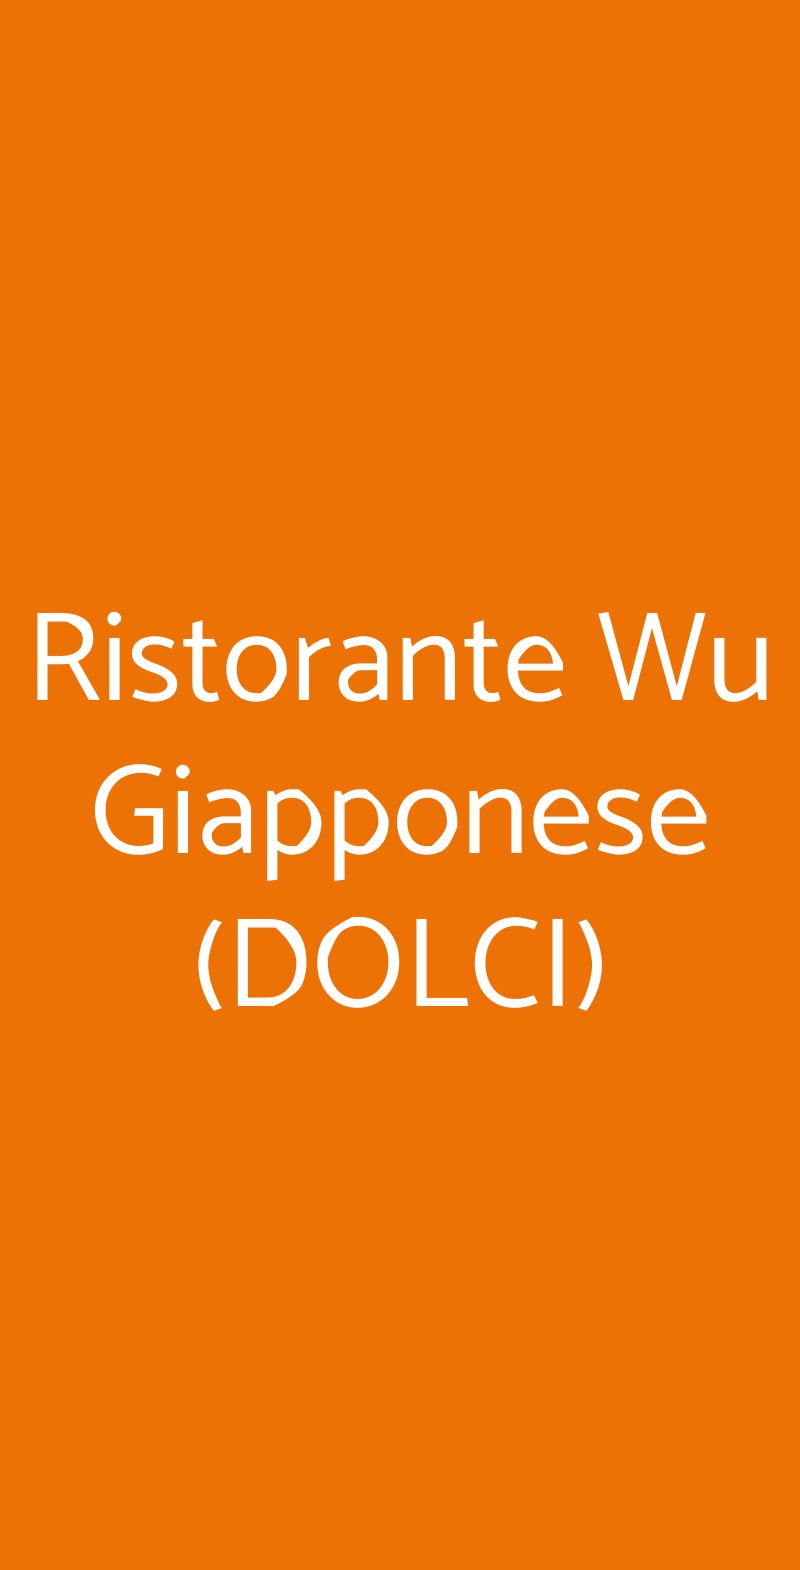 Ristorante Wu Giapponese (DOLCI) Milano menù 1 pagina